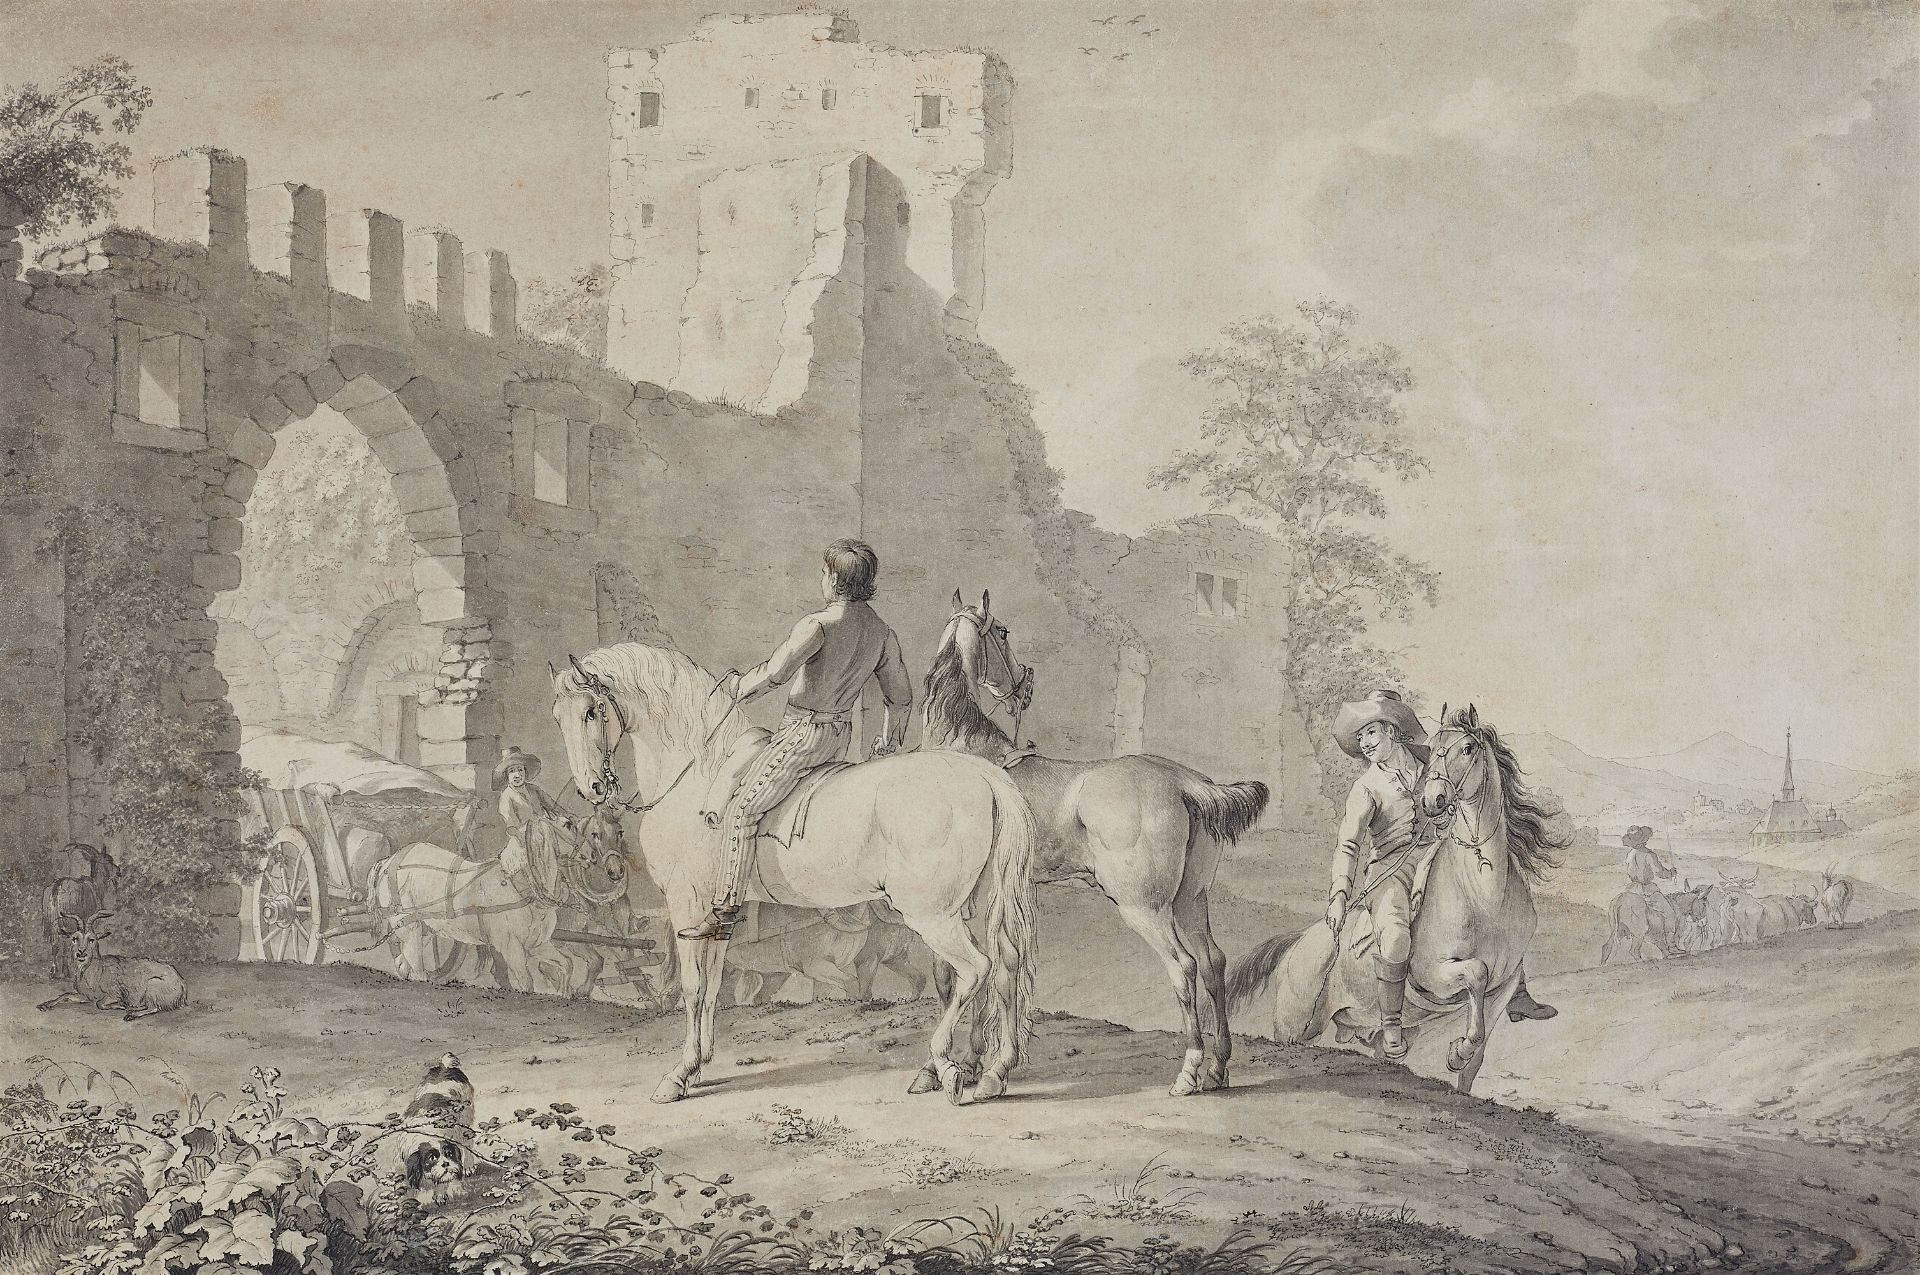 Johann Georg Pforr, Riders and Carts at a Medieval City Wall